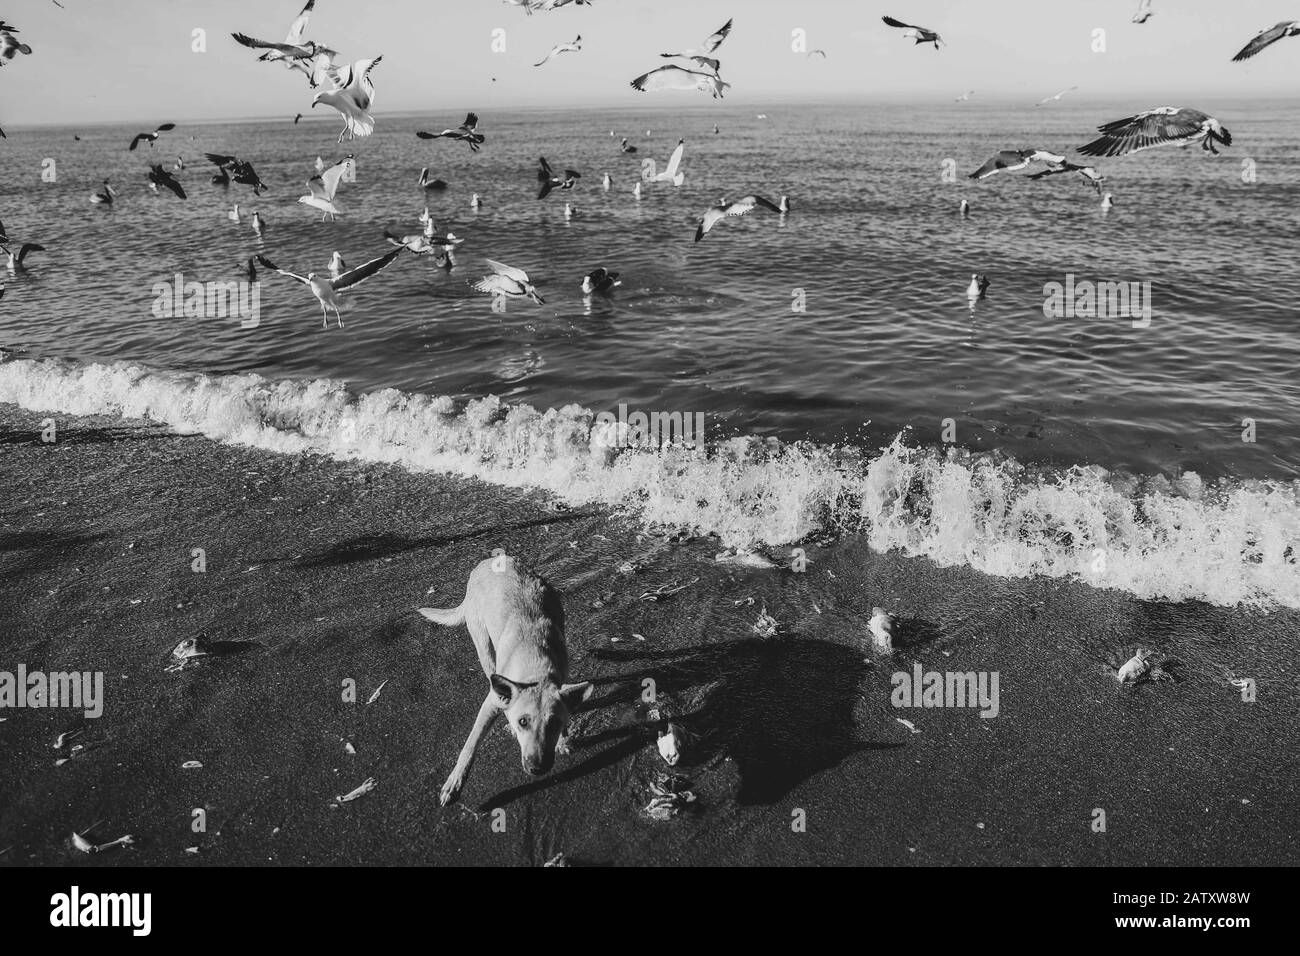 Seagulls in frenzy go ahead on fish remains on Sahuimaro beach, Sonora, Mexico ...   sea, beach shore, shoreline, marine life, feeding, eating, frenzy, wild, survival, bird, seagull, daylight, beautiful, sky, green, sea water, life, sea of cortez, gulf of california, Disproportionate impetus or violence, Violent exaltation of mood, especially of a disproportionate passion. Violence or impetus   Gaviotas en frenesí se avalanzan sobre restos de pescados en  playa Sahuimaro, Sonora, Mexico...  maritima, orilla de la playa, litoral, vida marina, alimentandose, comiendo, frenesí , salvaje, superviv Stock Photo